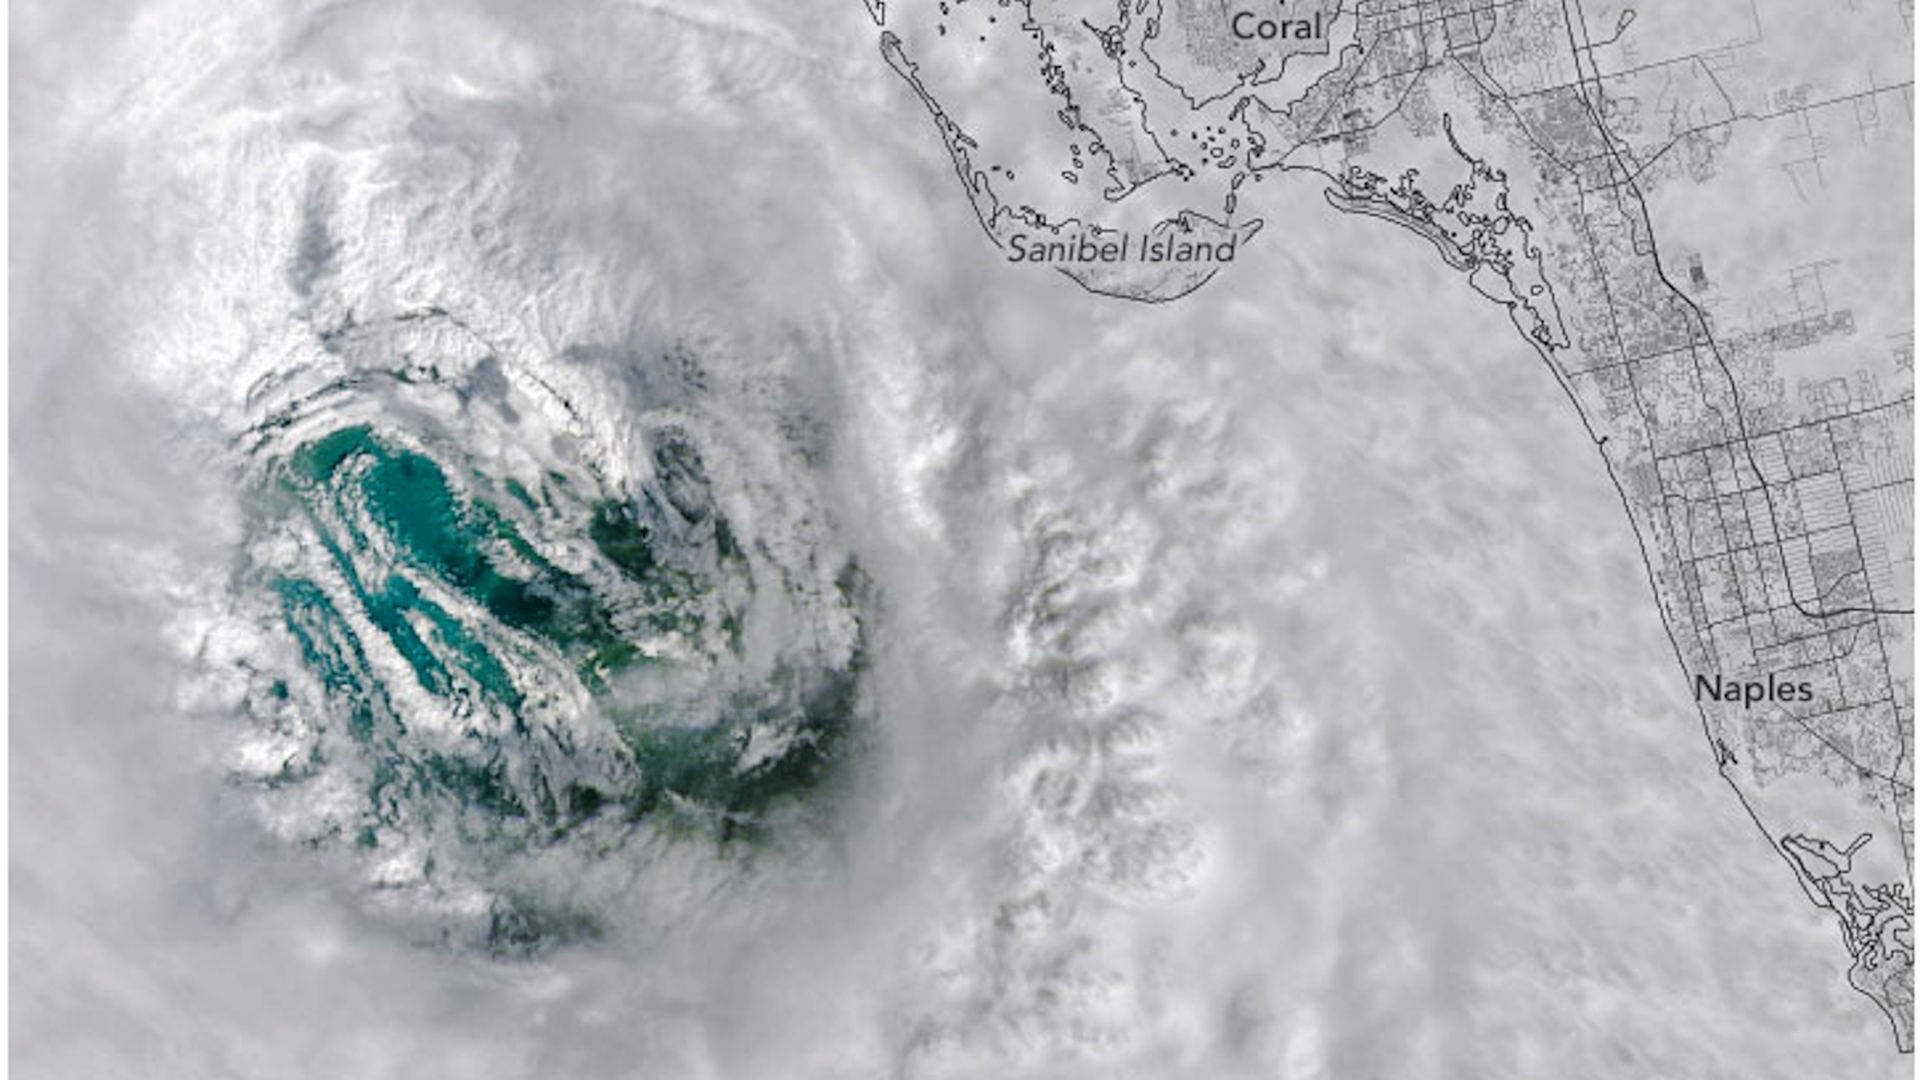 Closeup of Hurricane Ian's eye seen from space as the storm struck Sanibel Island, Fla., on Sept. 18, 2022. Image: NASA